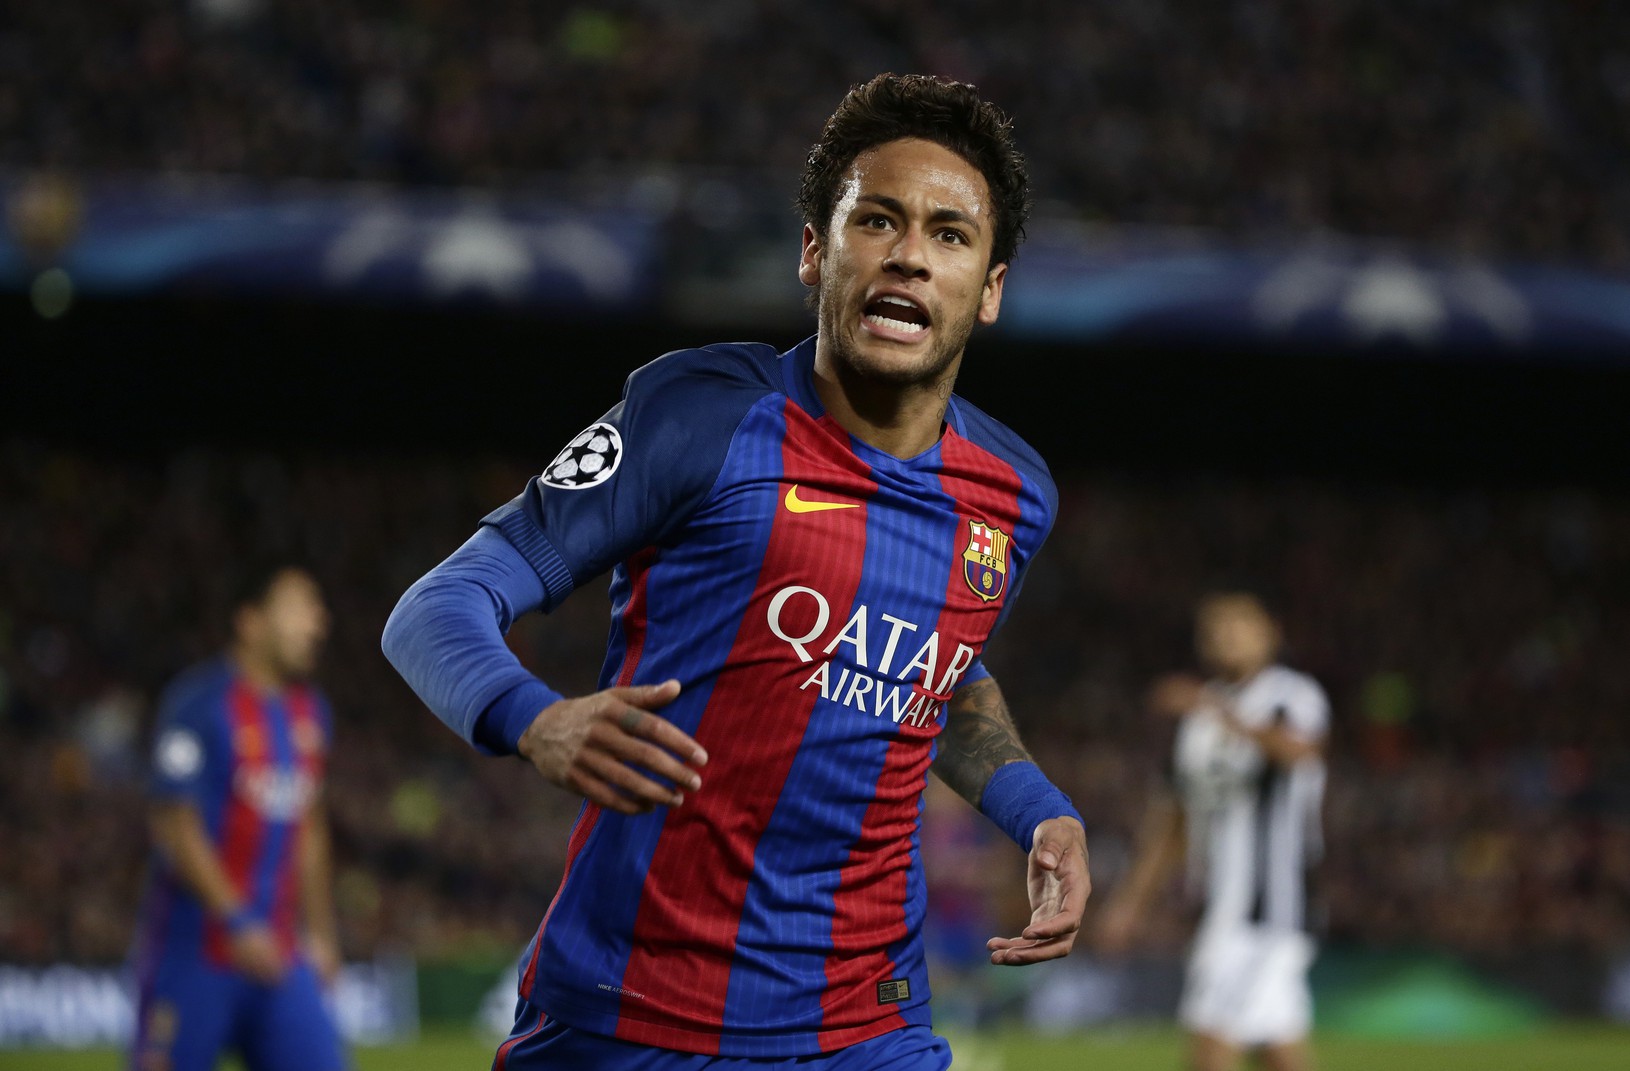 Neymar v drese Barcelony